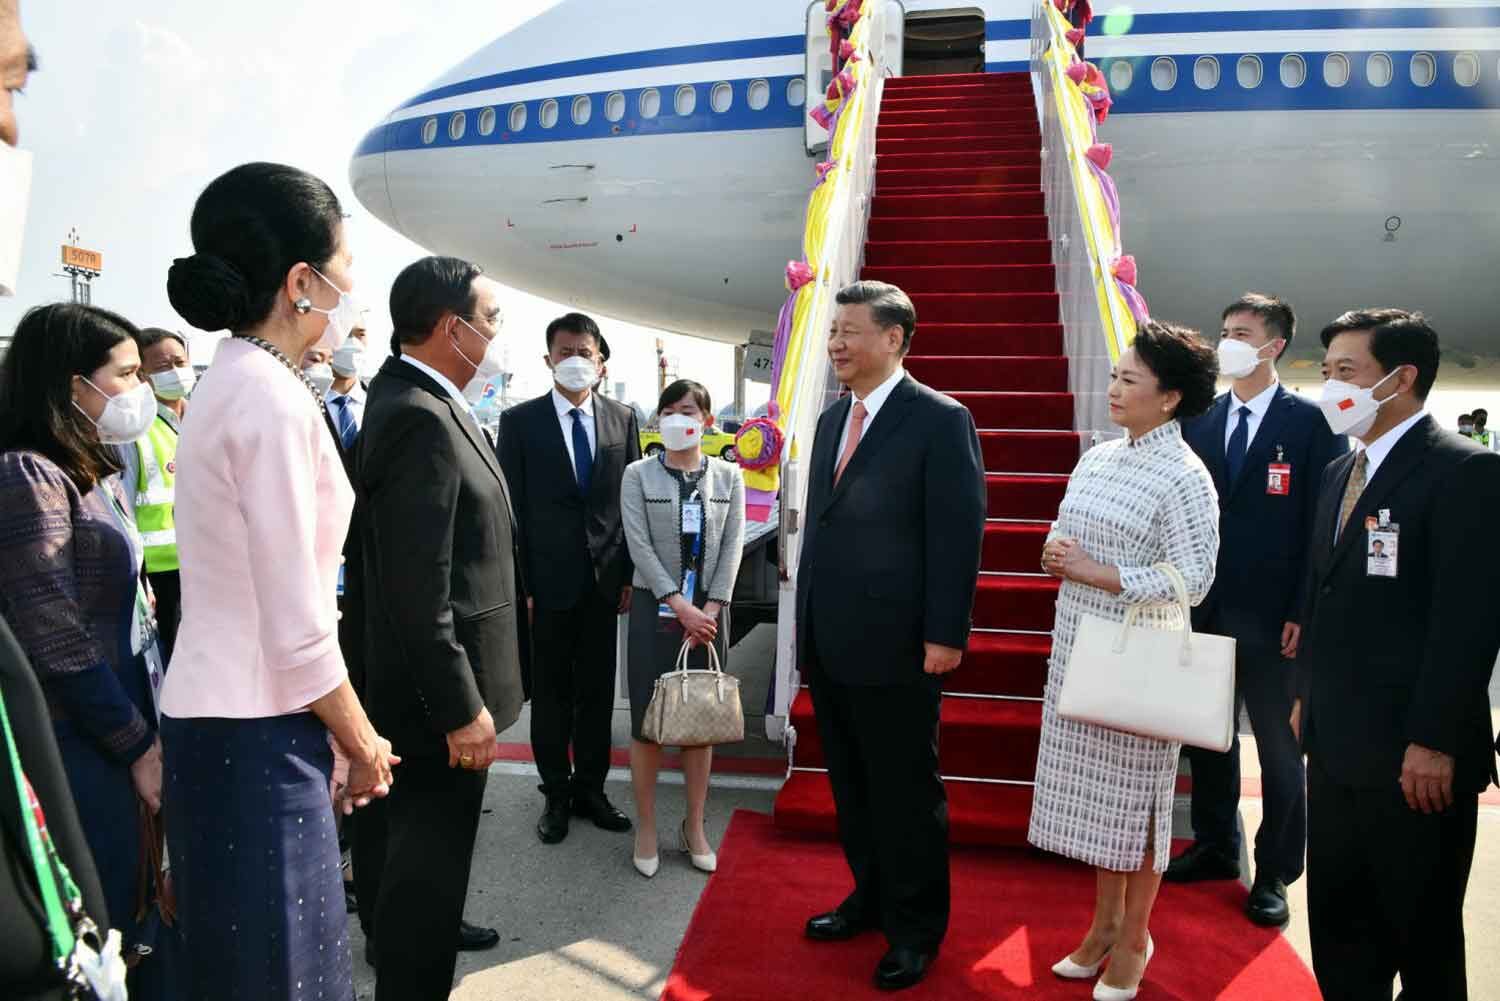 China's President Xi Jinping and his wife Peng Liyuan